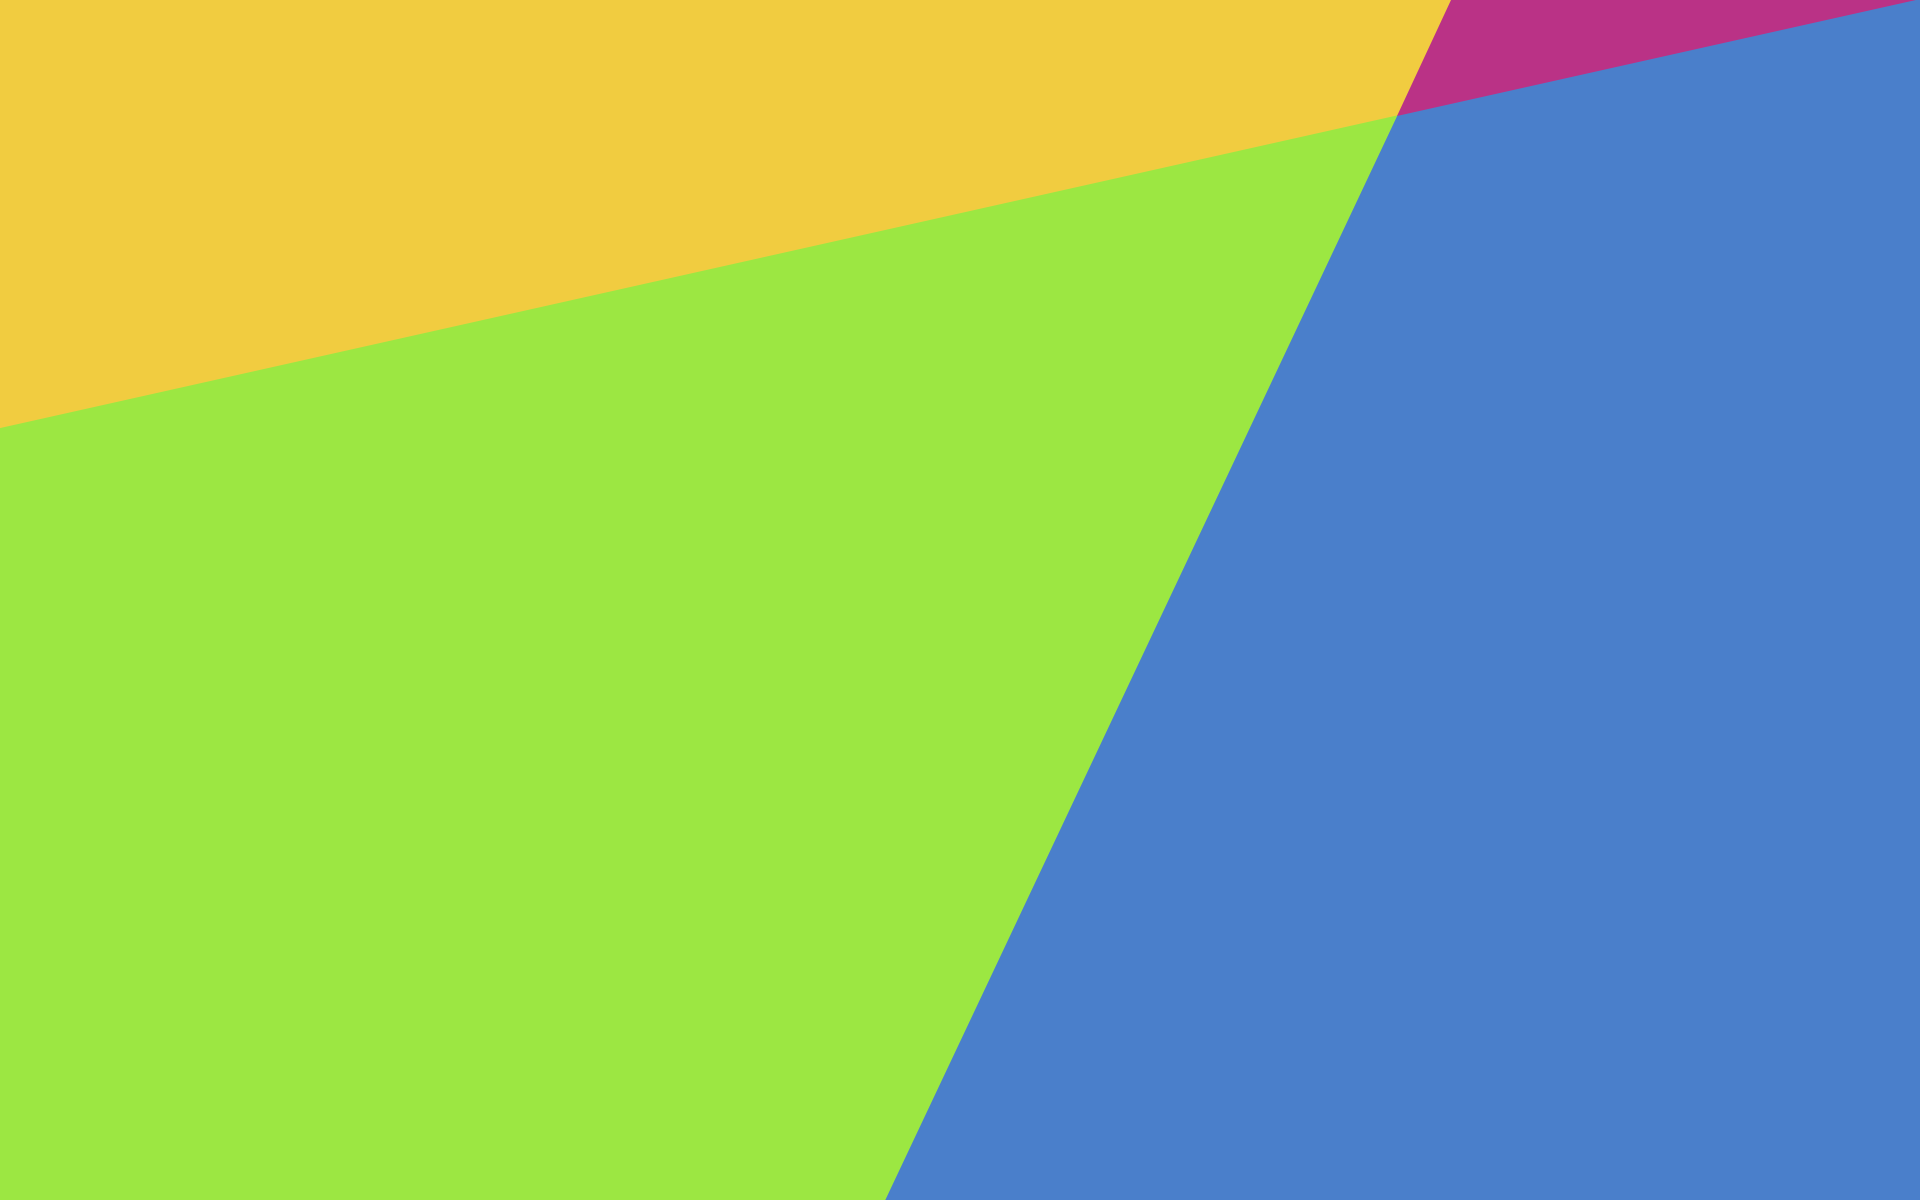 Google Nexus Backgrounds Group 81